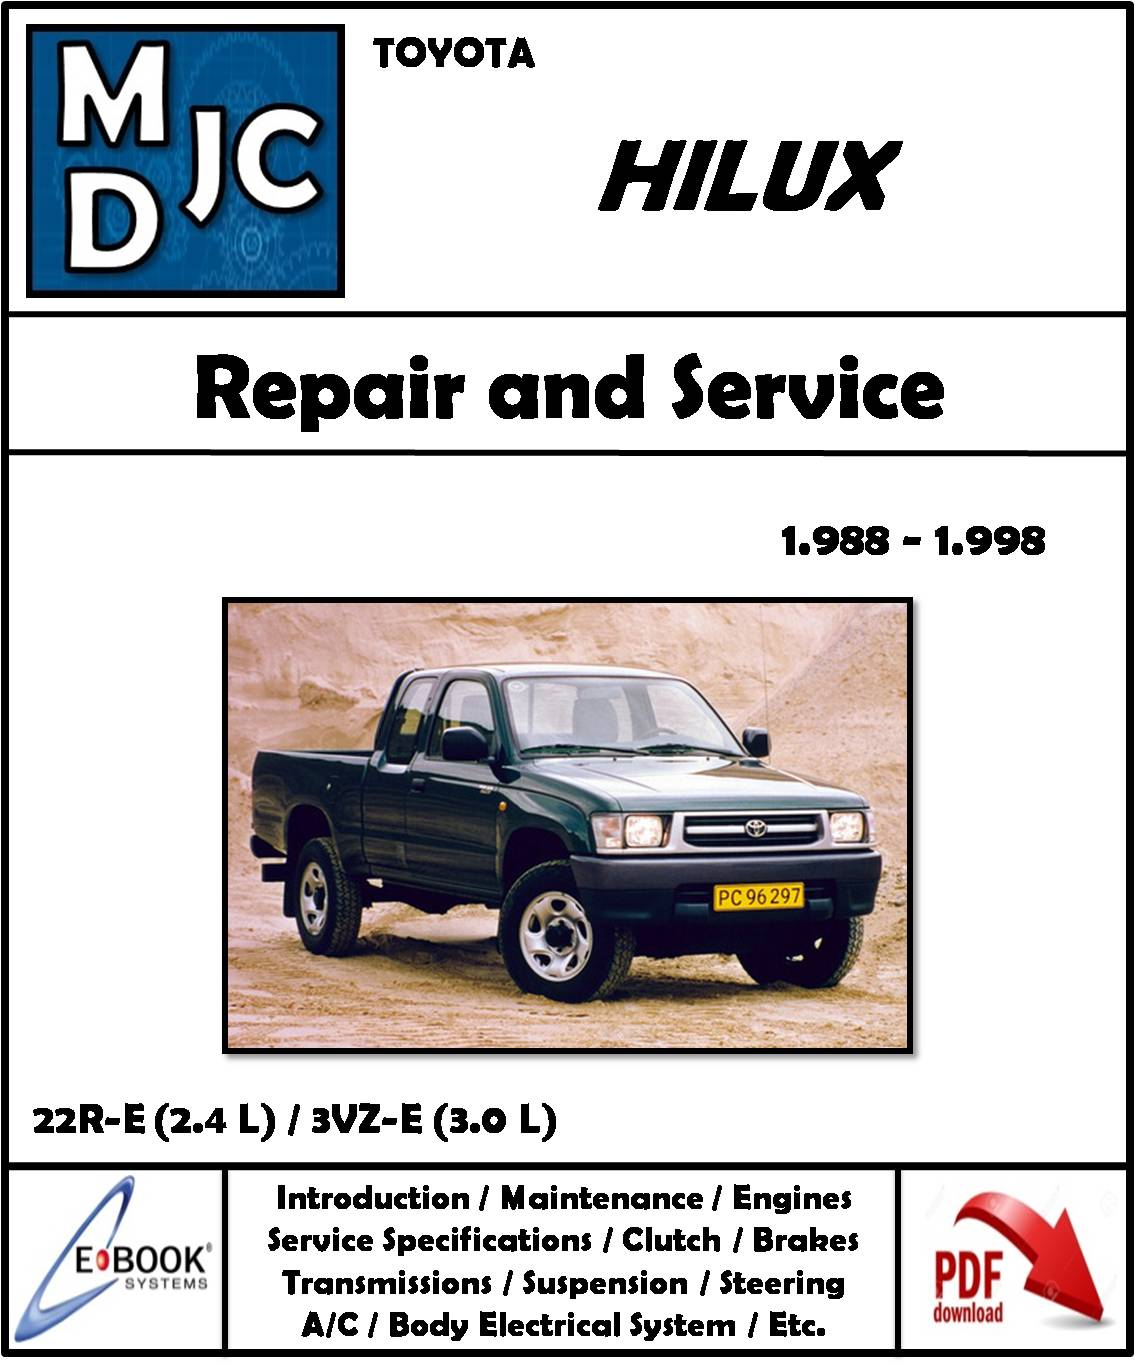 Toyota Hilux 1988 - 1998